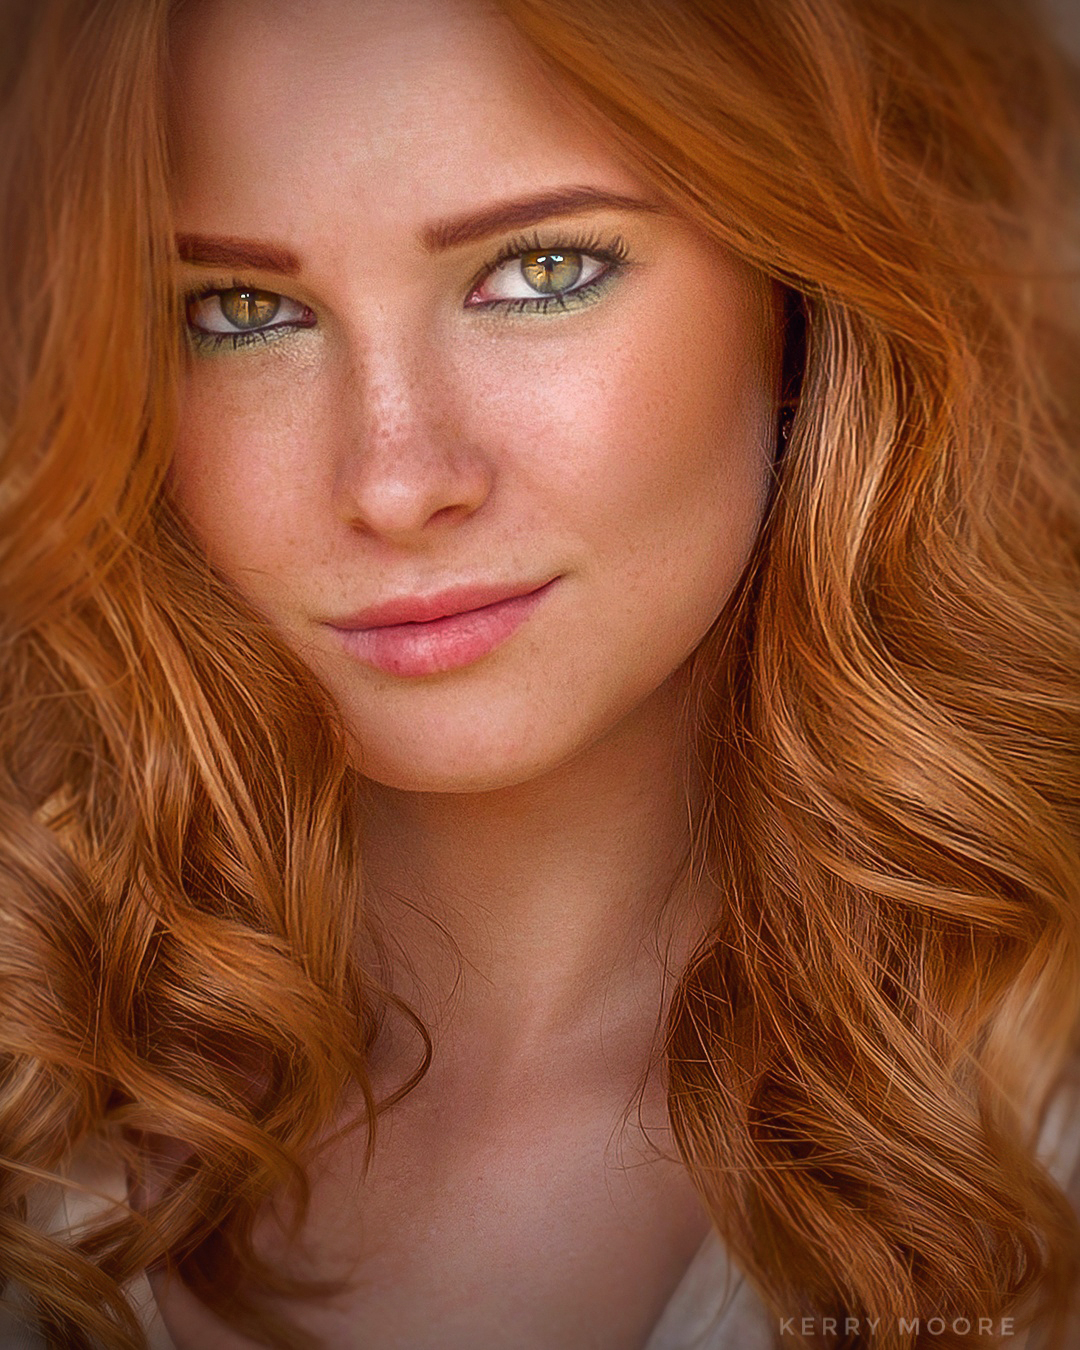 Kerry Moore Women Redhead Makeup Long Hair Wavy Hair Eyeliner Freckles Portrait Model 1080x1350